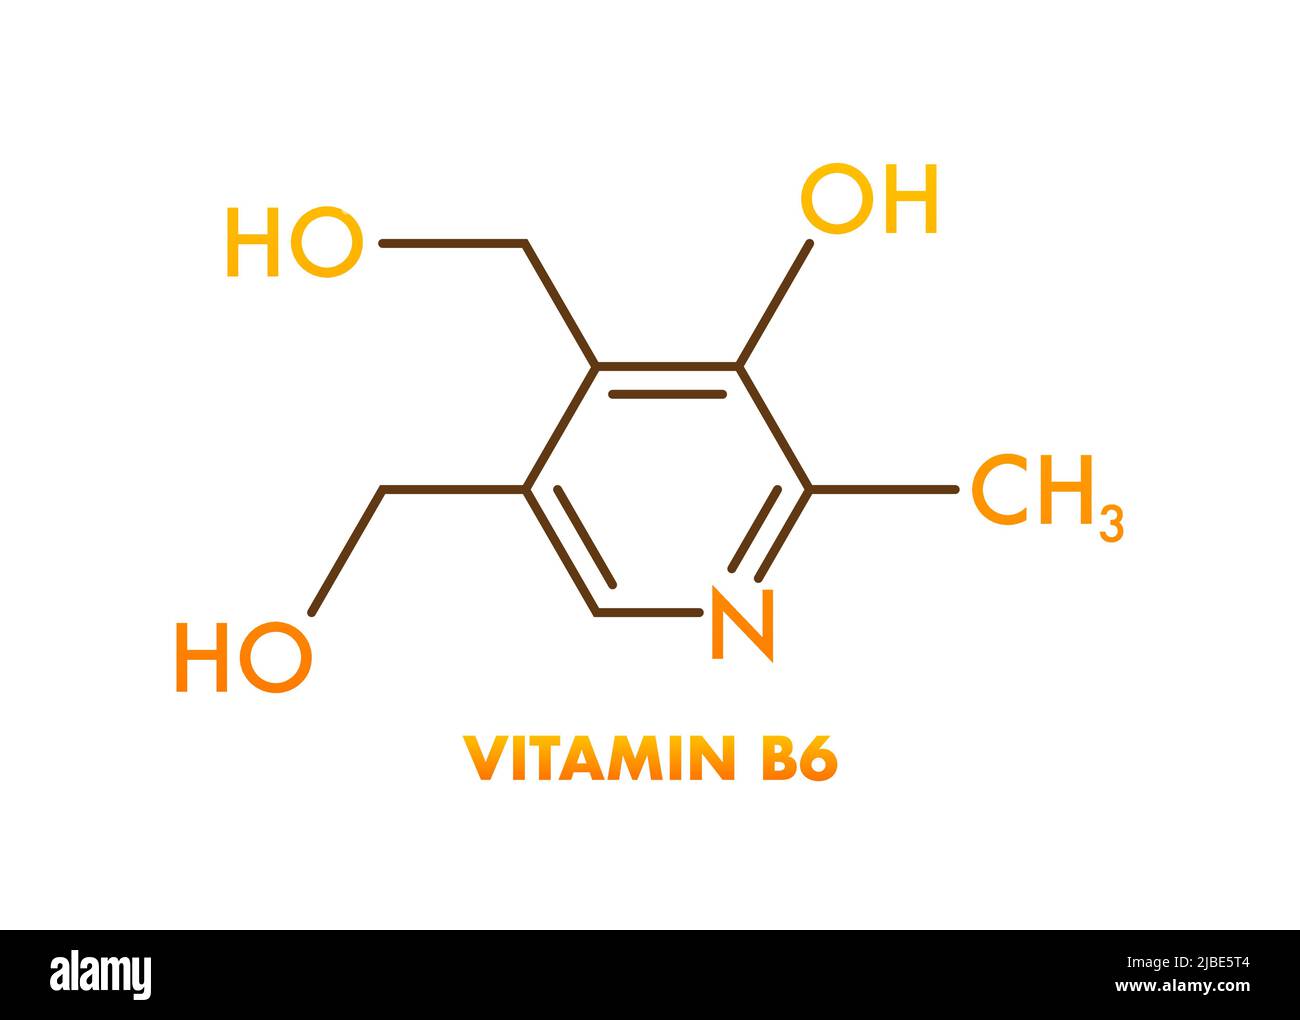 Vitamin b6 formula for medical design. Vitamin b6 formula. Stock Vector